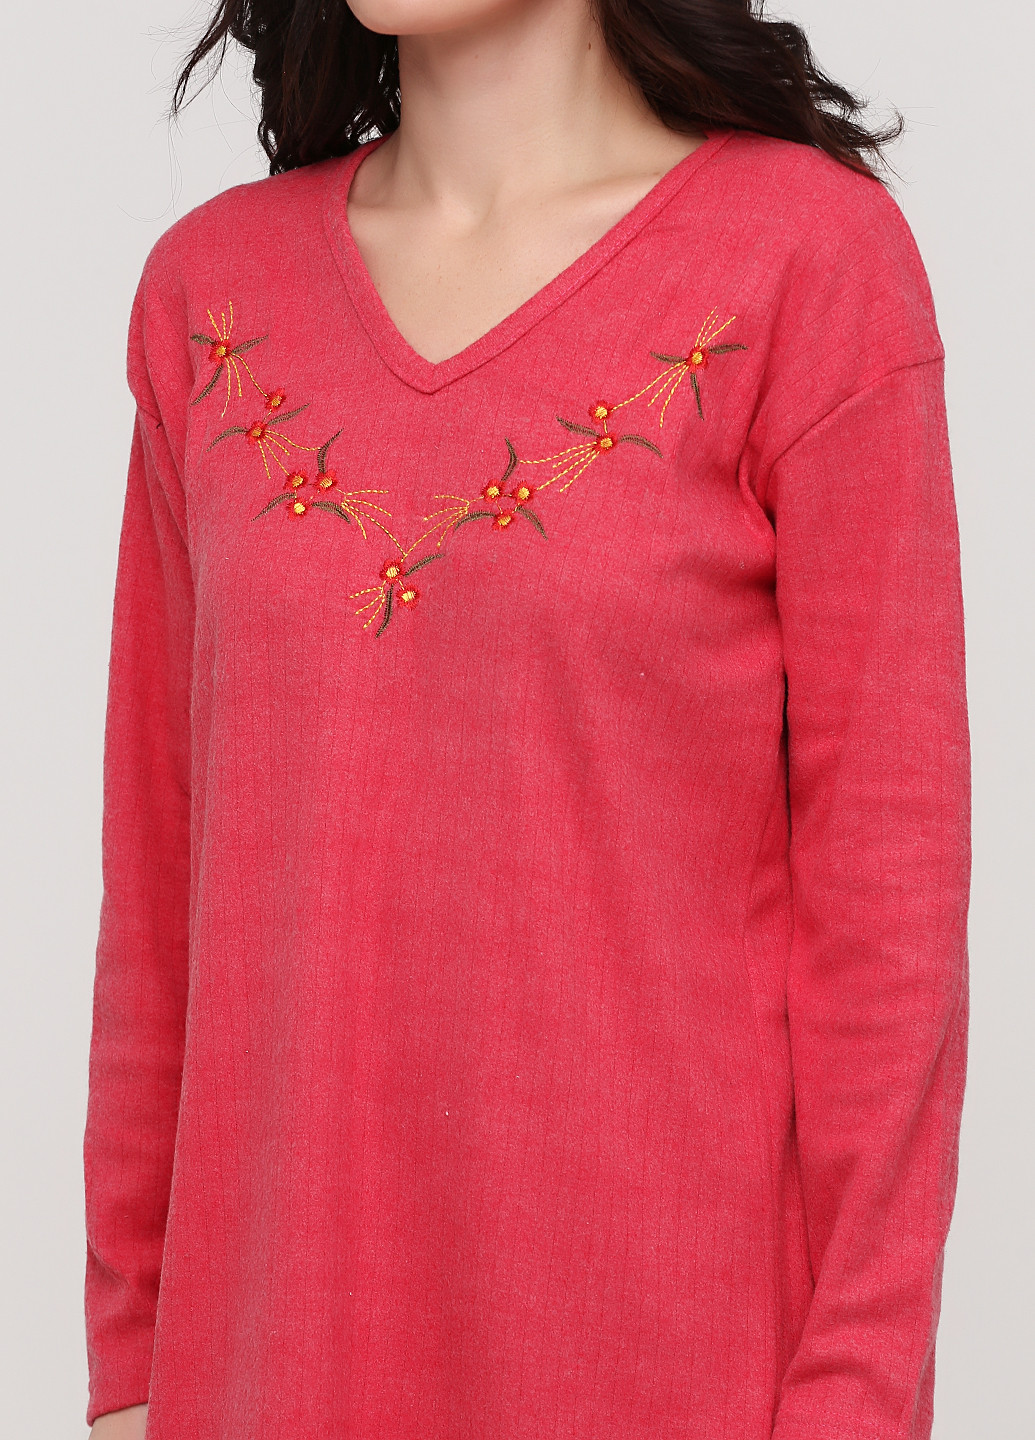 Ночная рубашка Rinda Pijama (206180340)